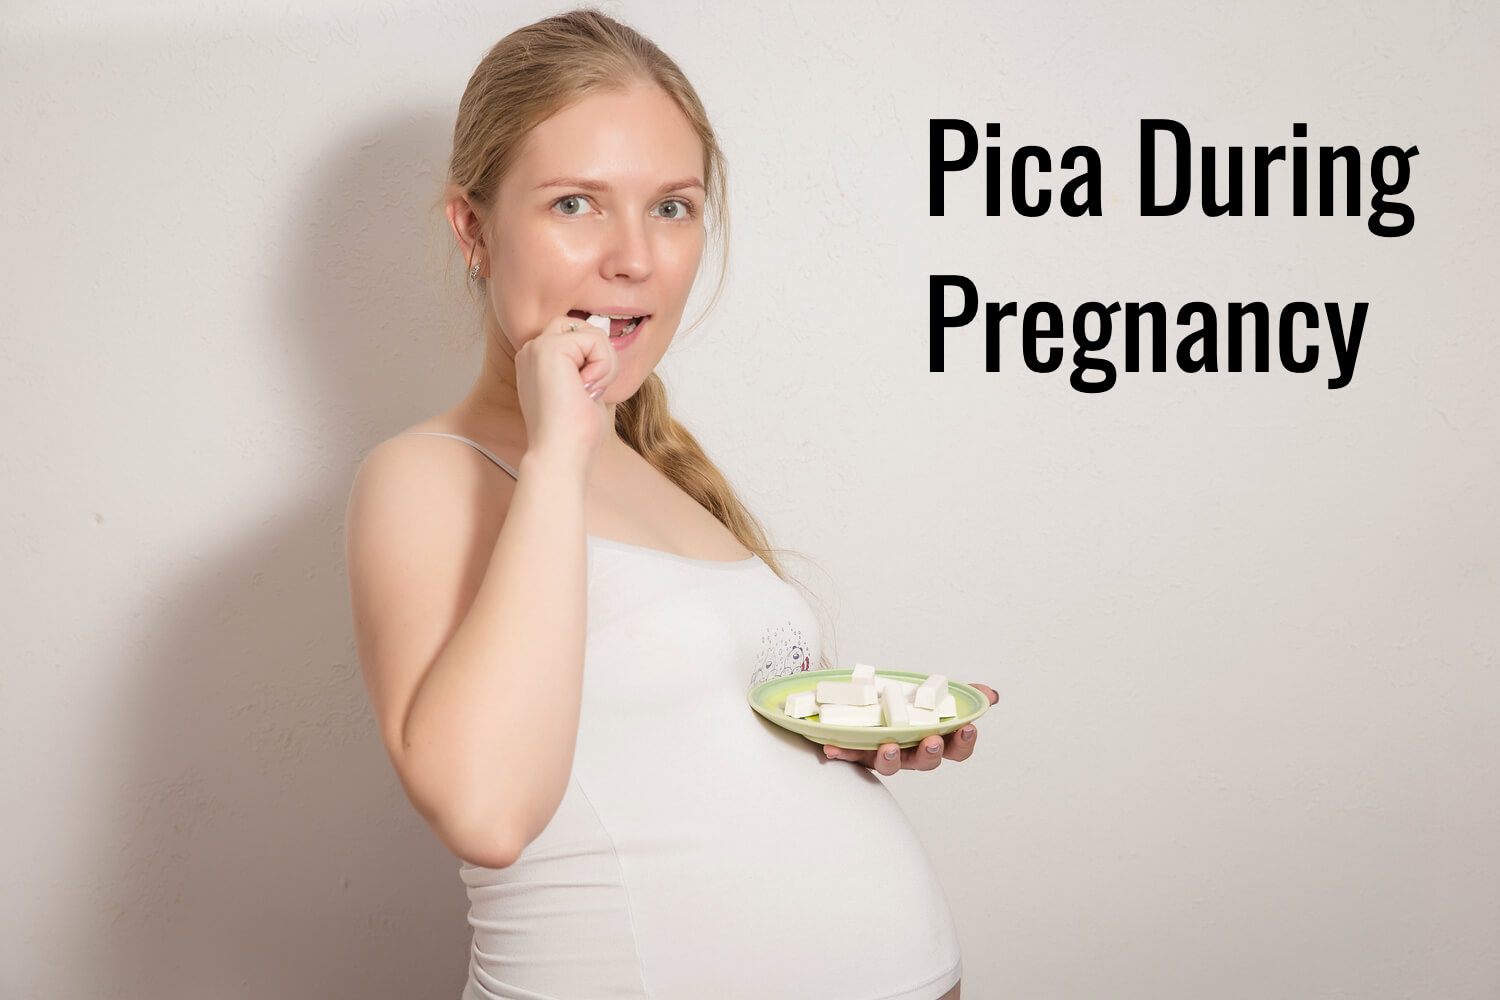 pica in pregnancy definition